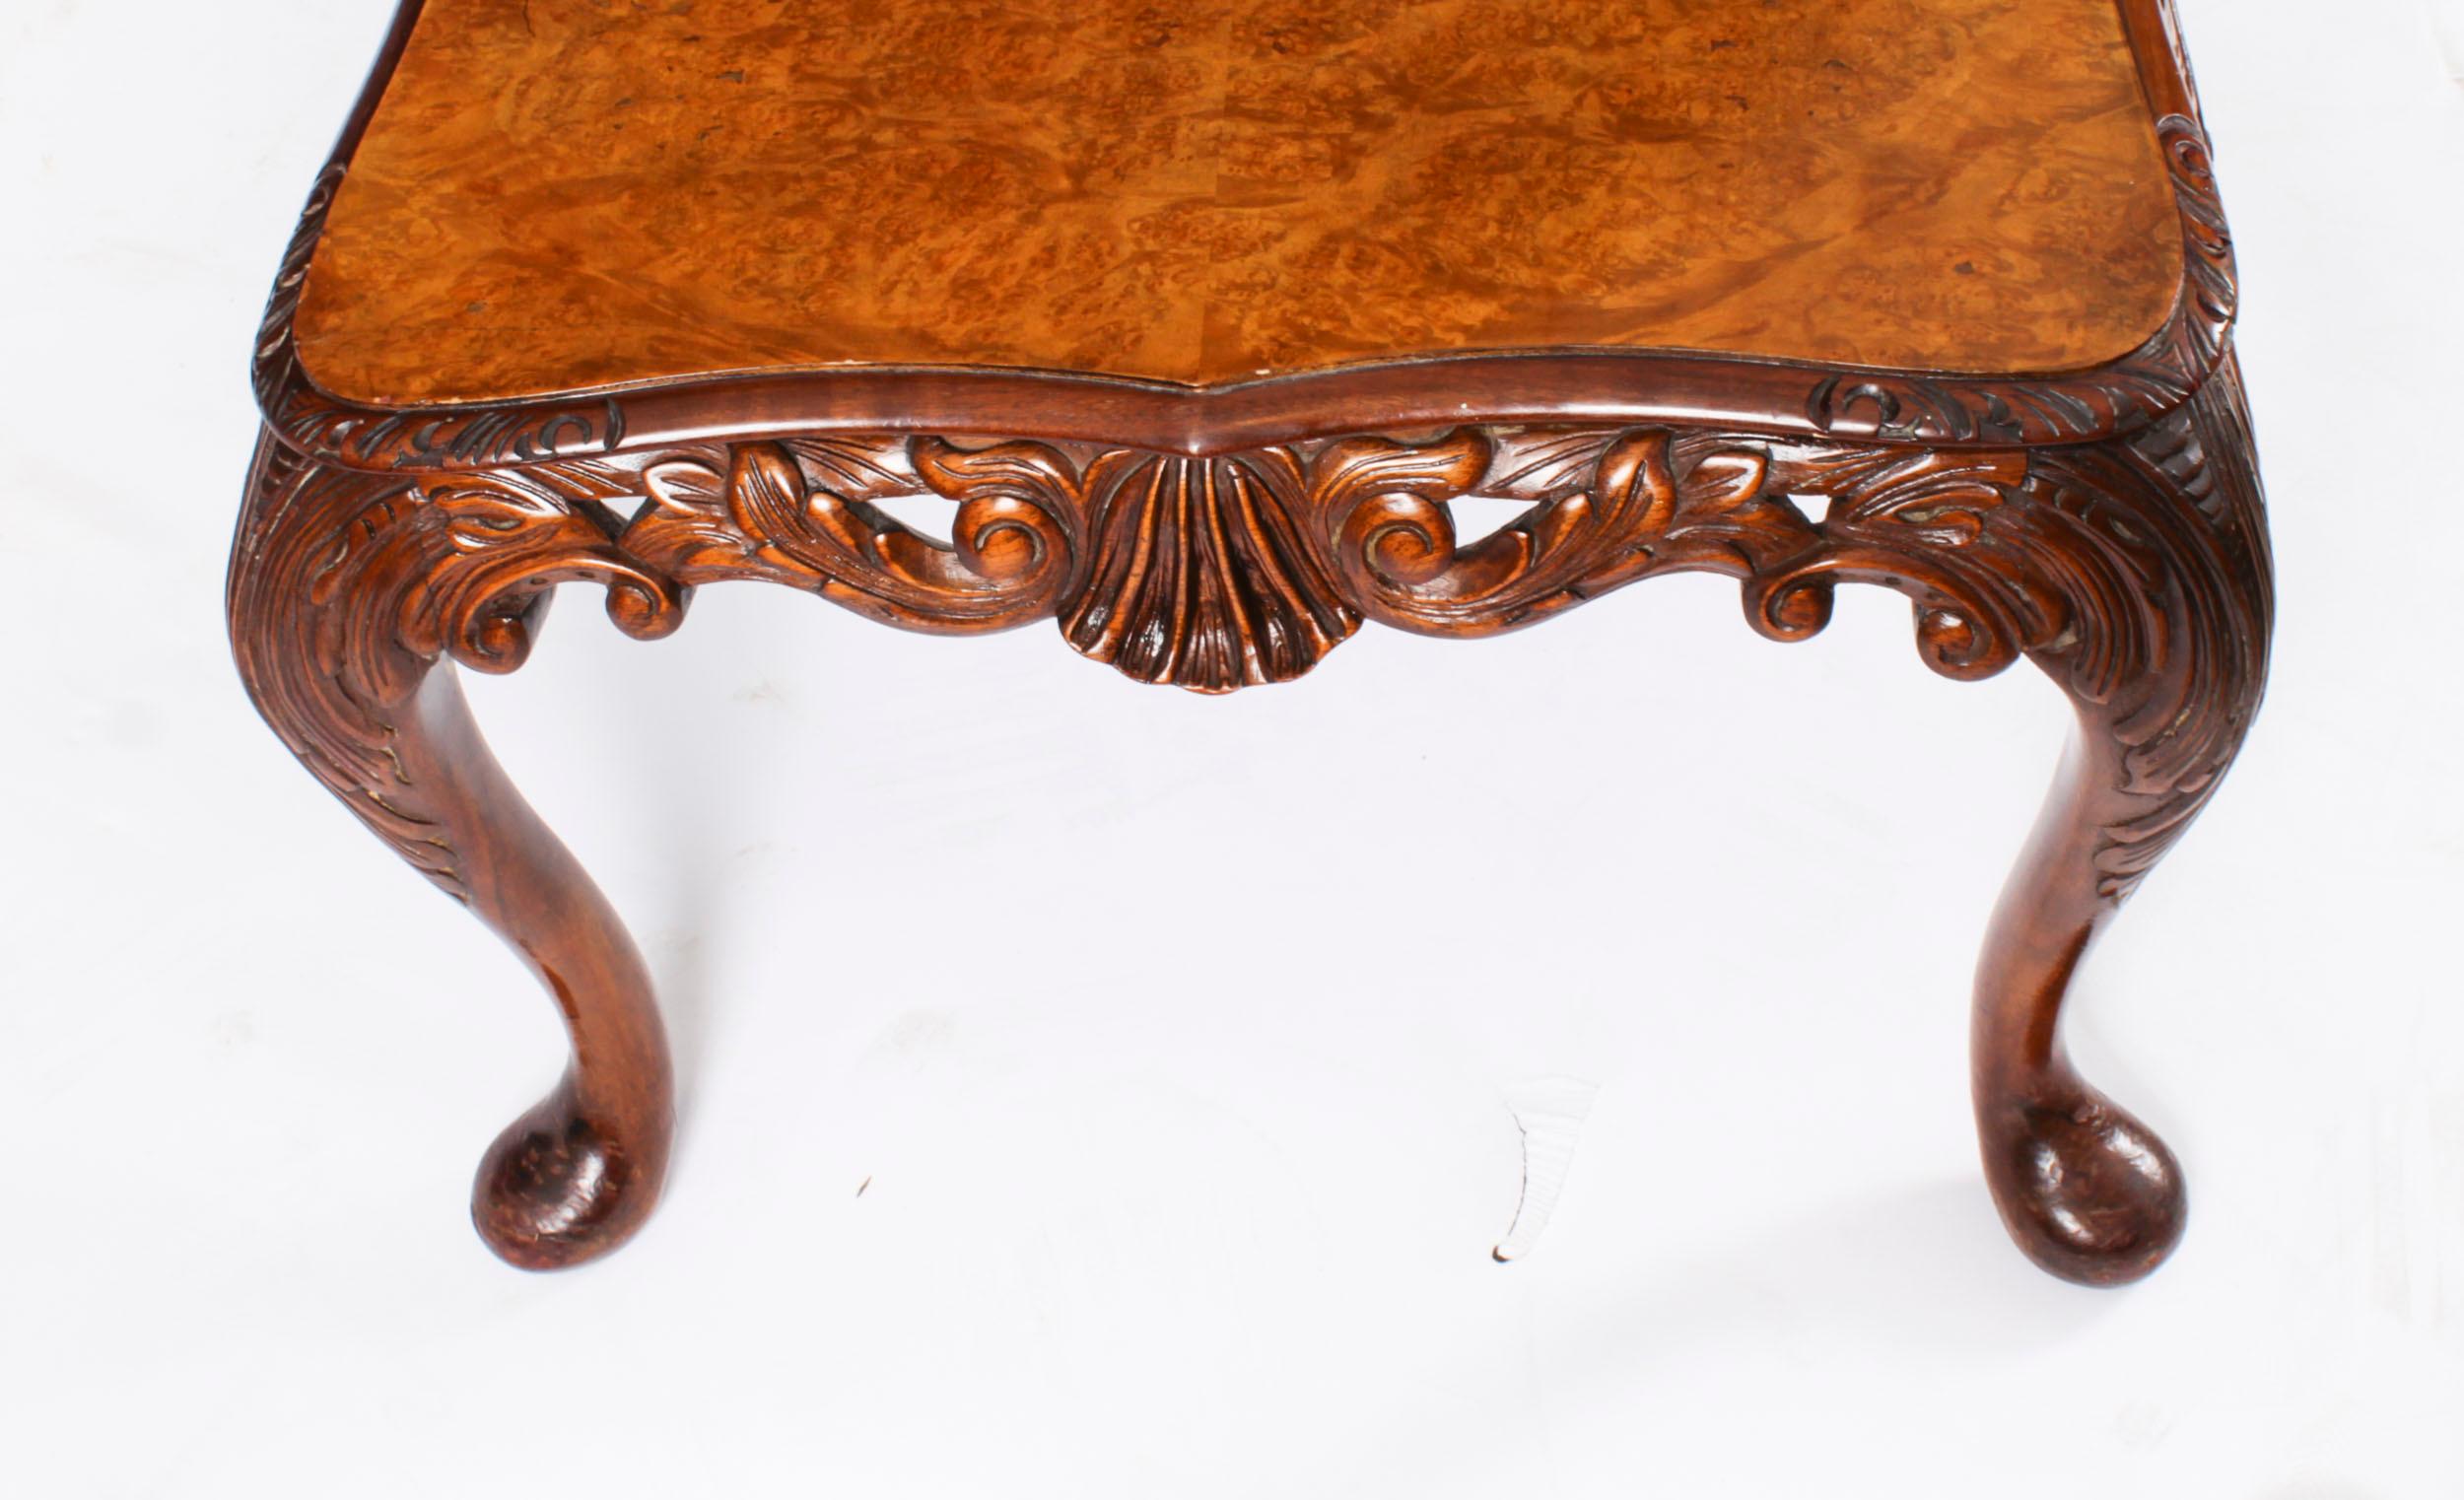 Antique Queen Anne Revival Burr Walnut Coffee Table c.1920 For Sale 5